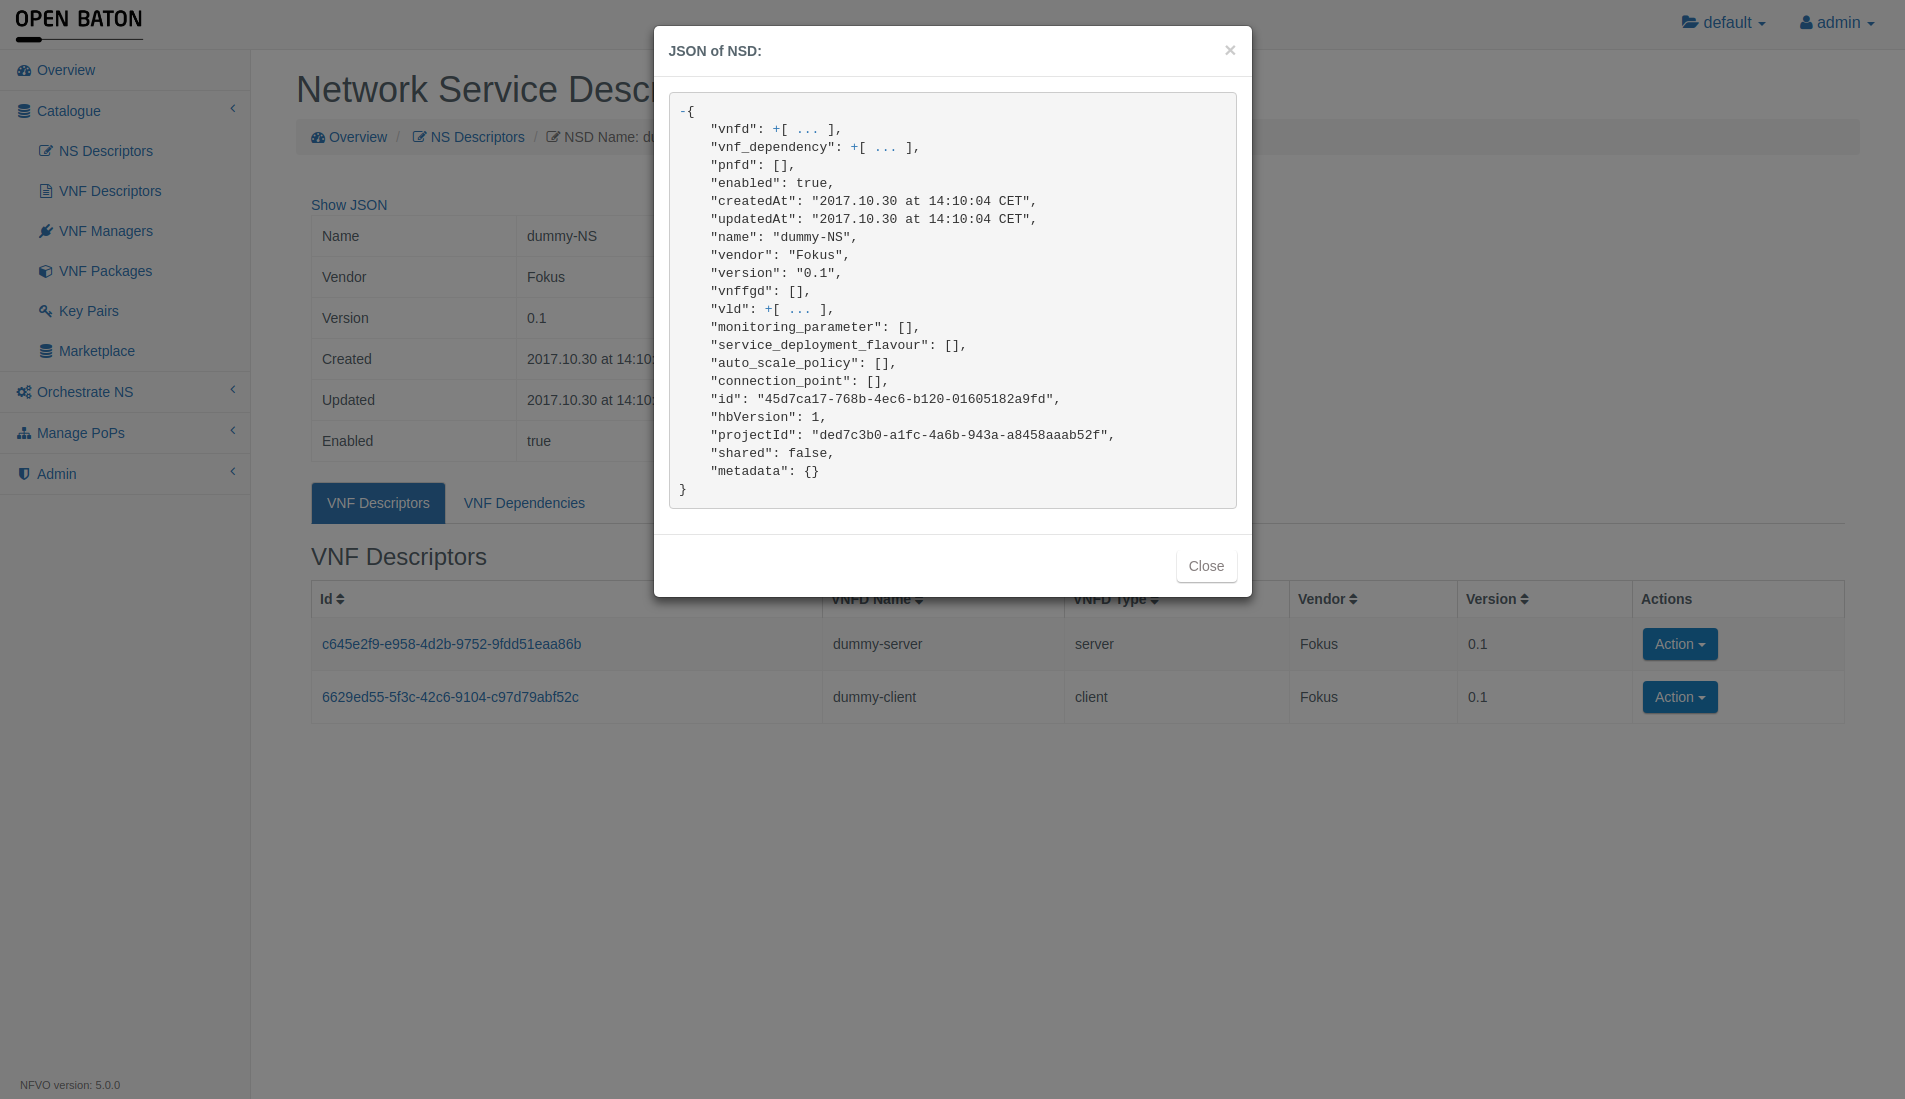 JSON of Network Service Descriptor